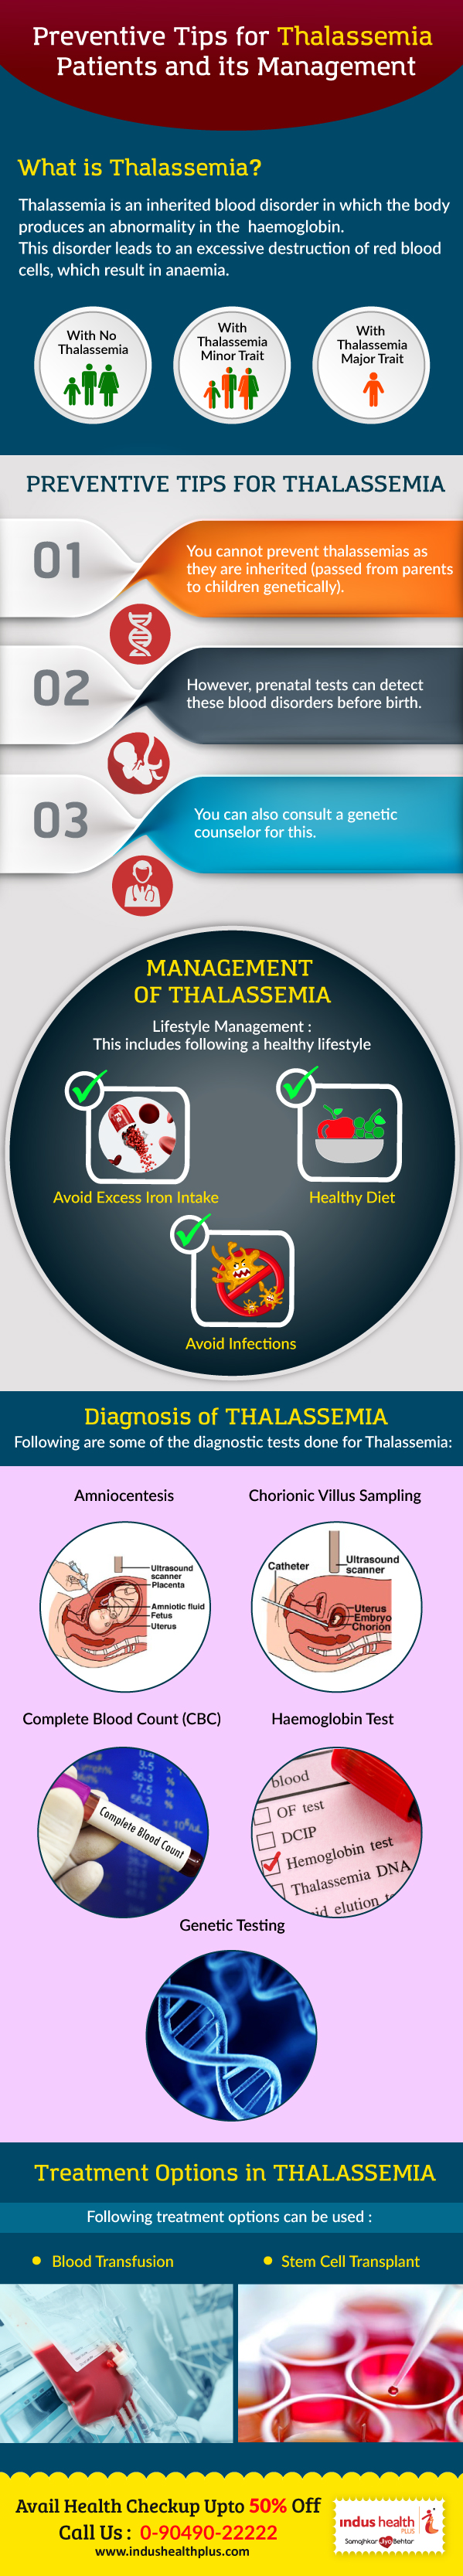 Preventive Tips for Thalassemia